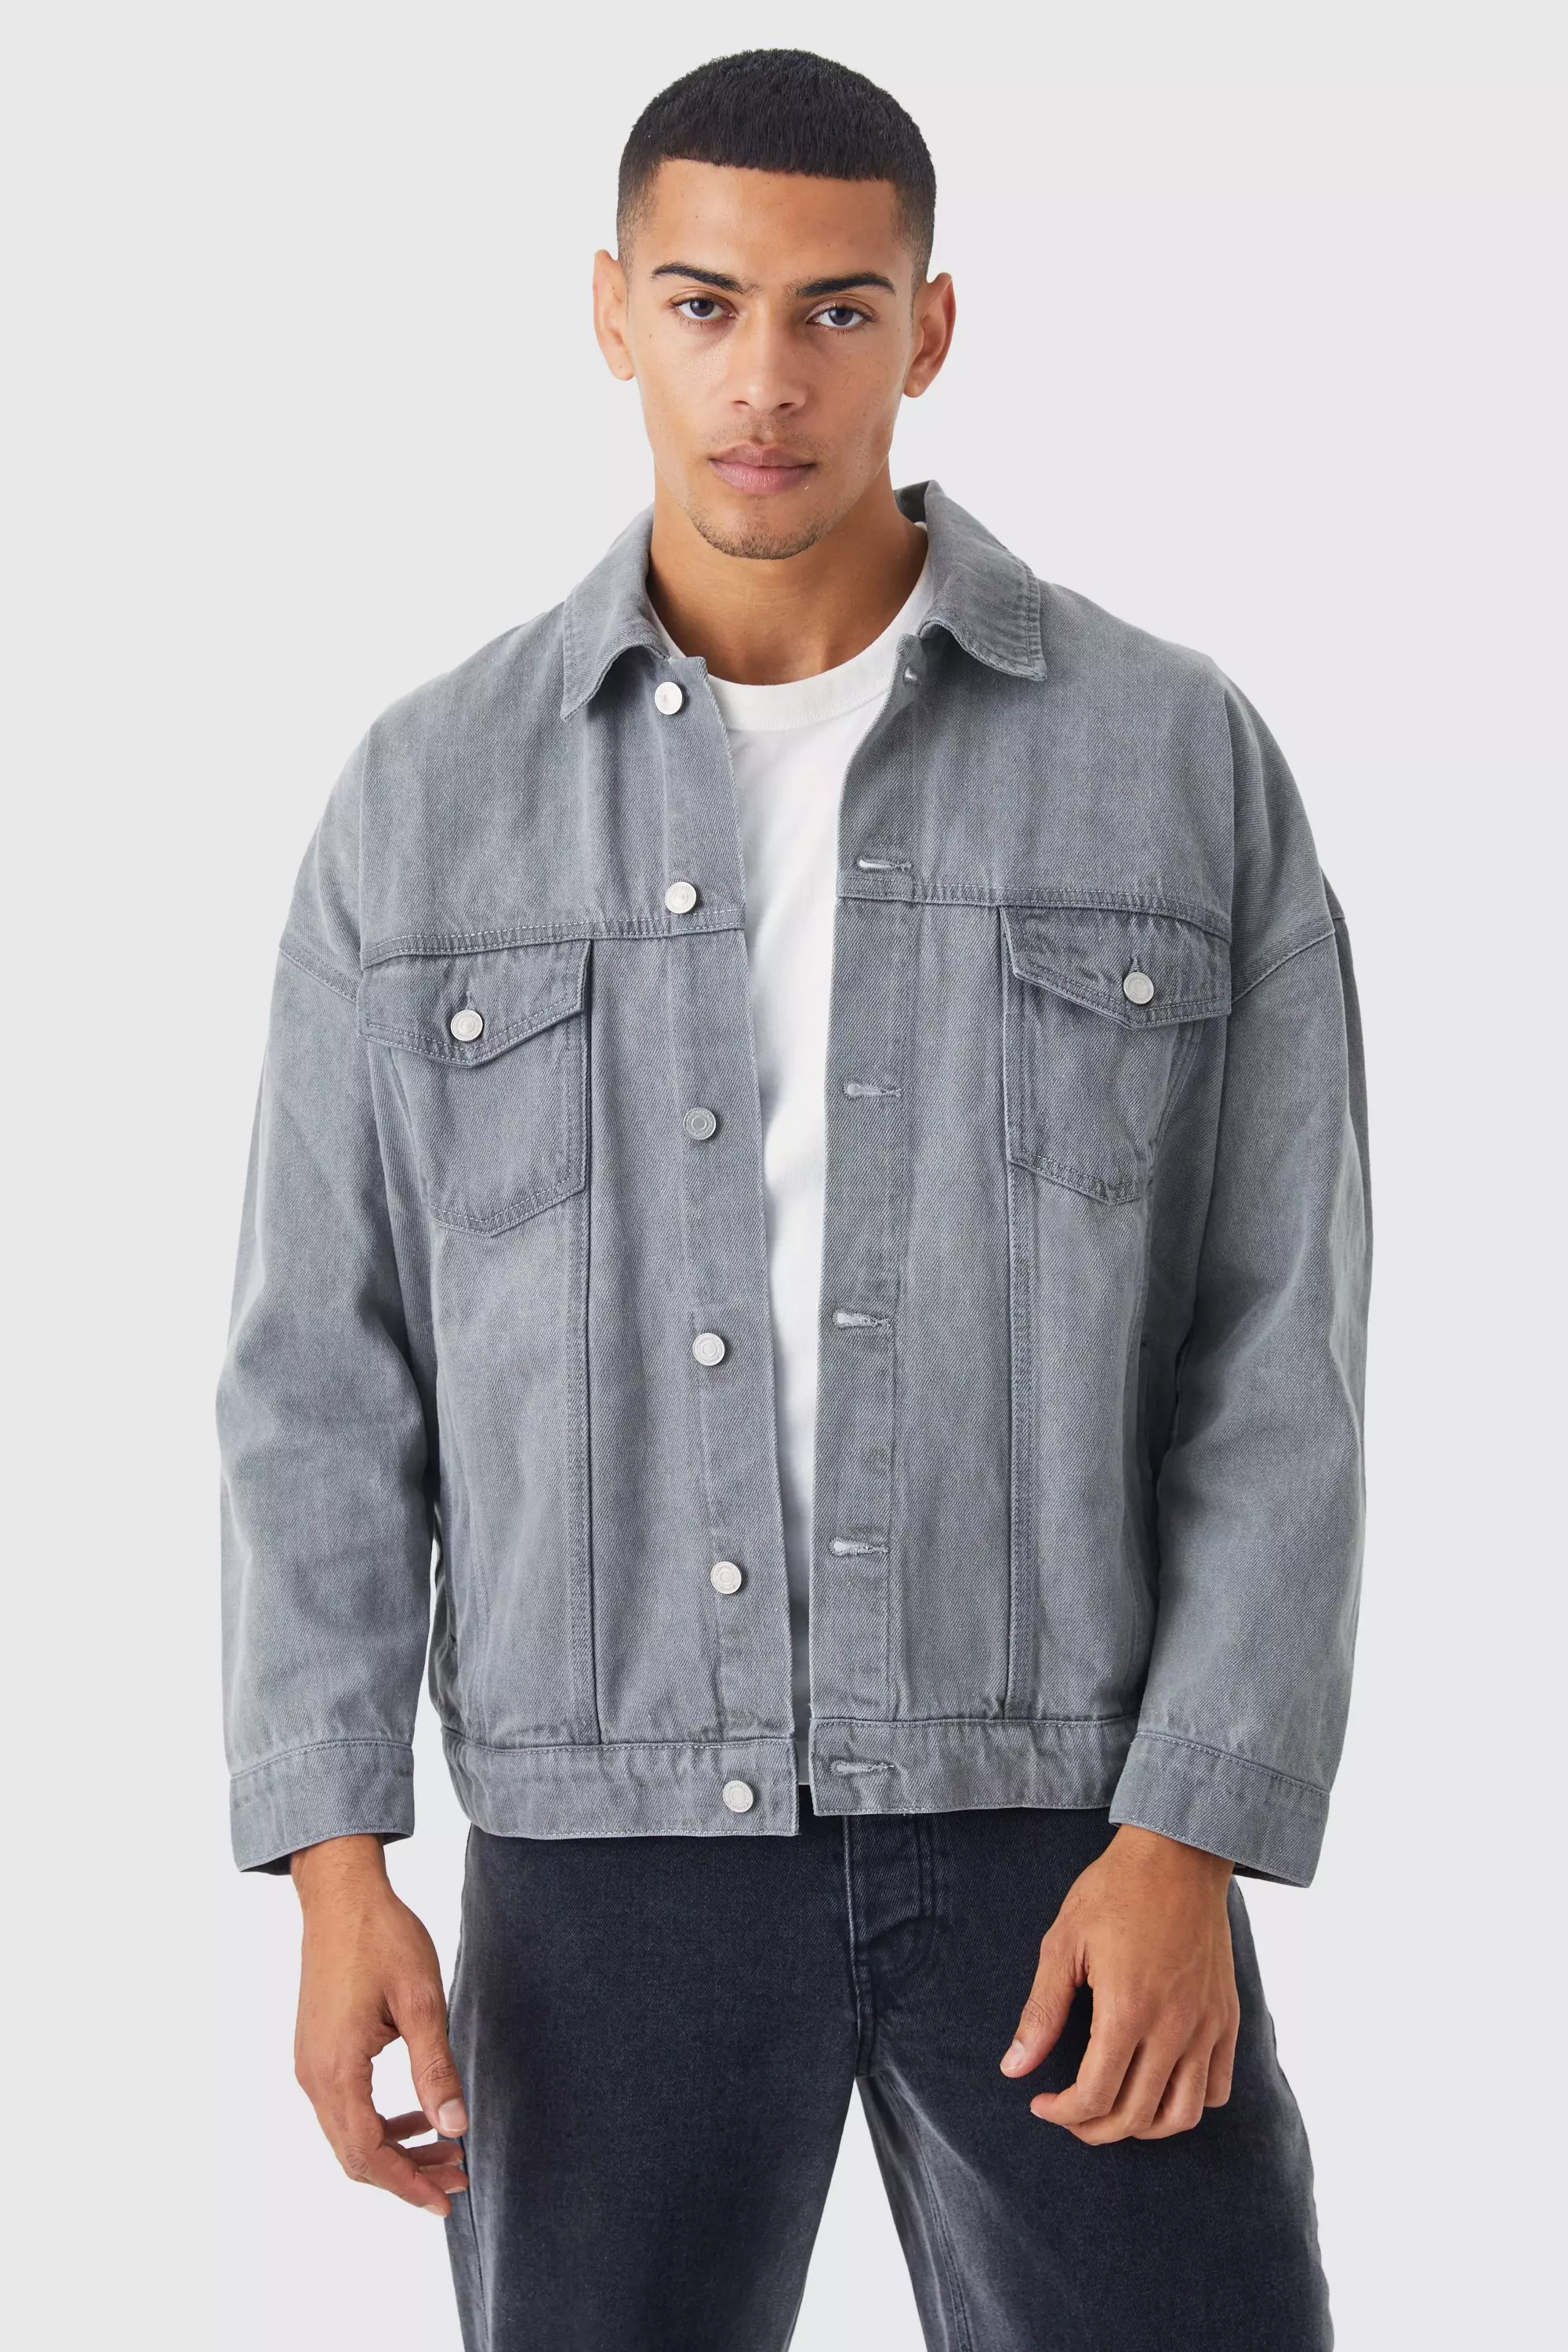 Oversized Jean Jackets Mid grey